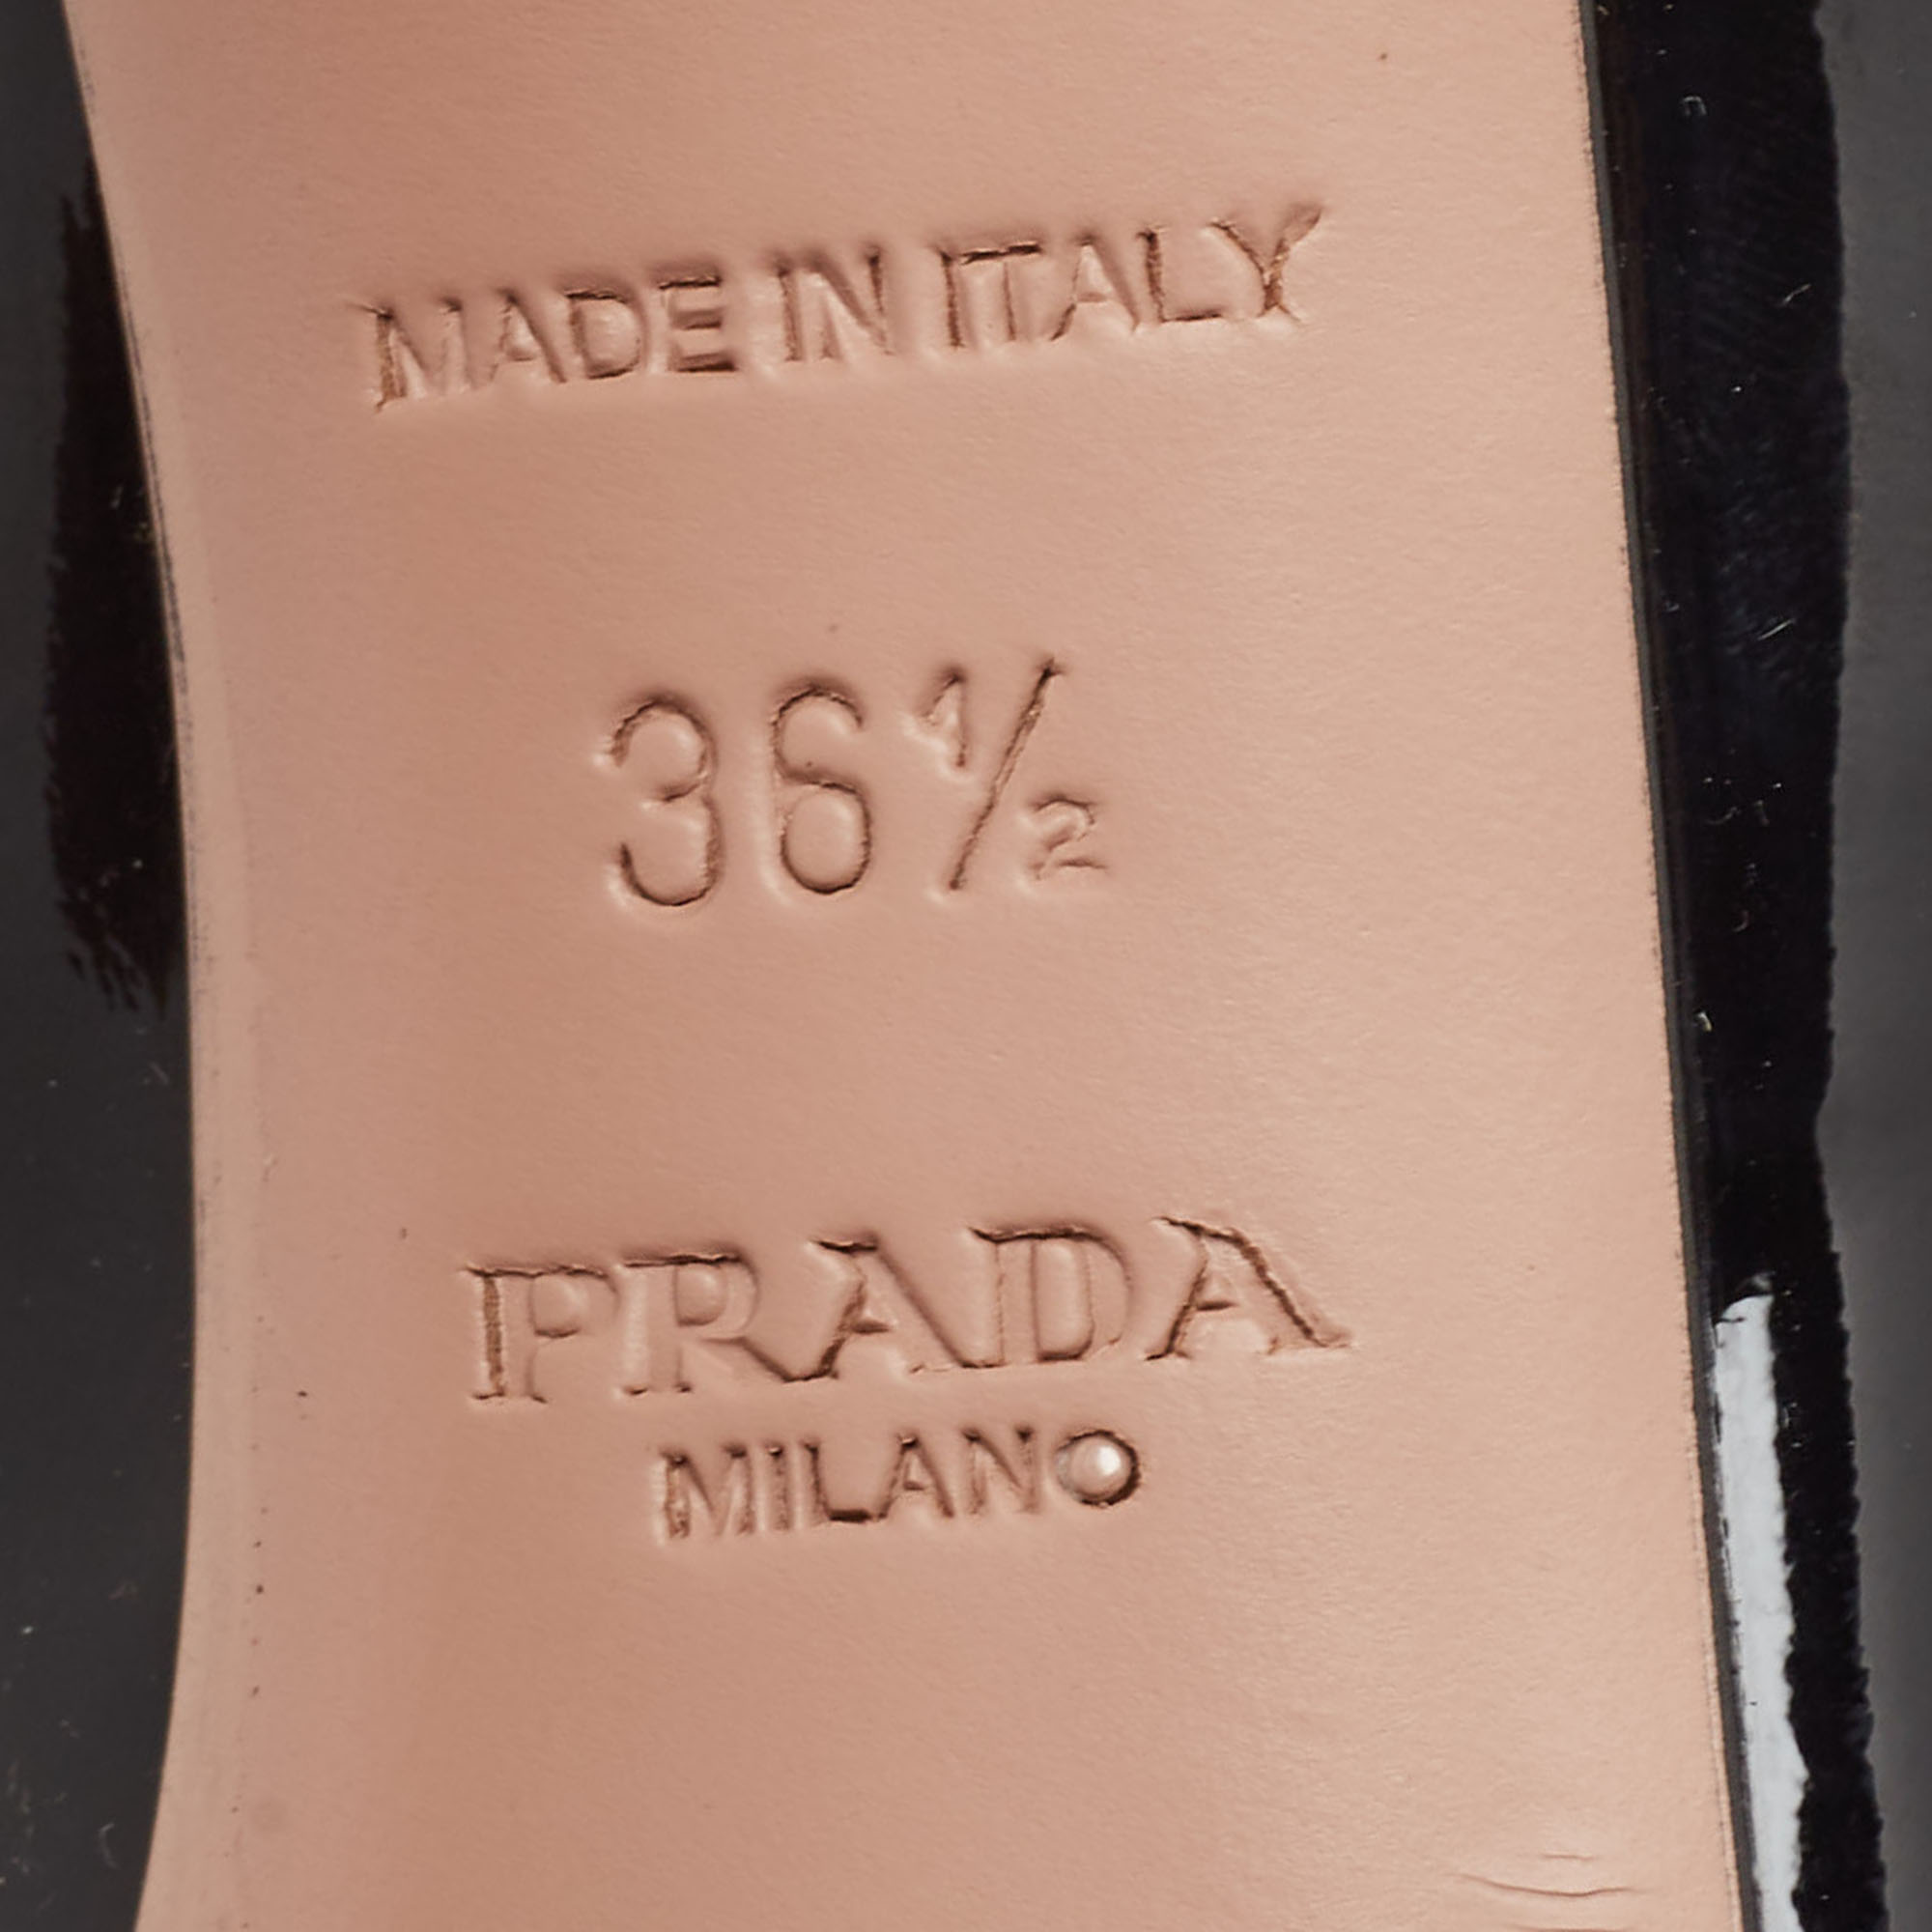 Prada Black Patent Leather Peep Toe Pumps Size 36.5